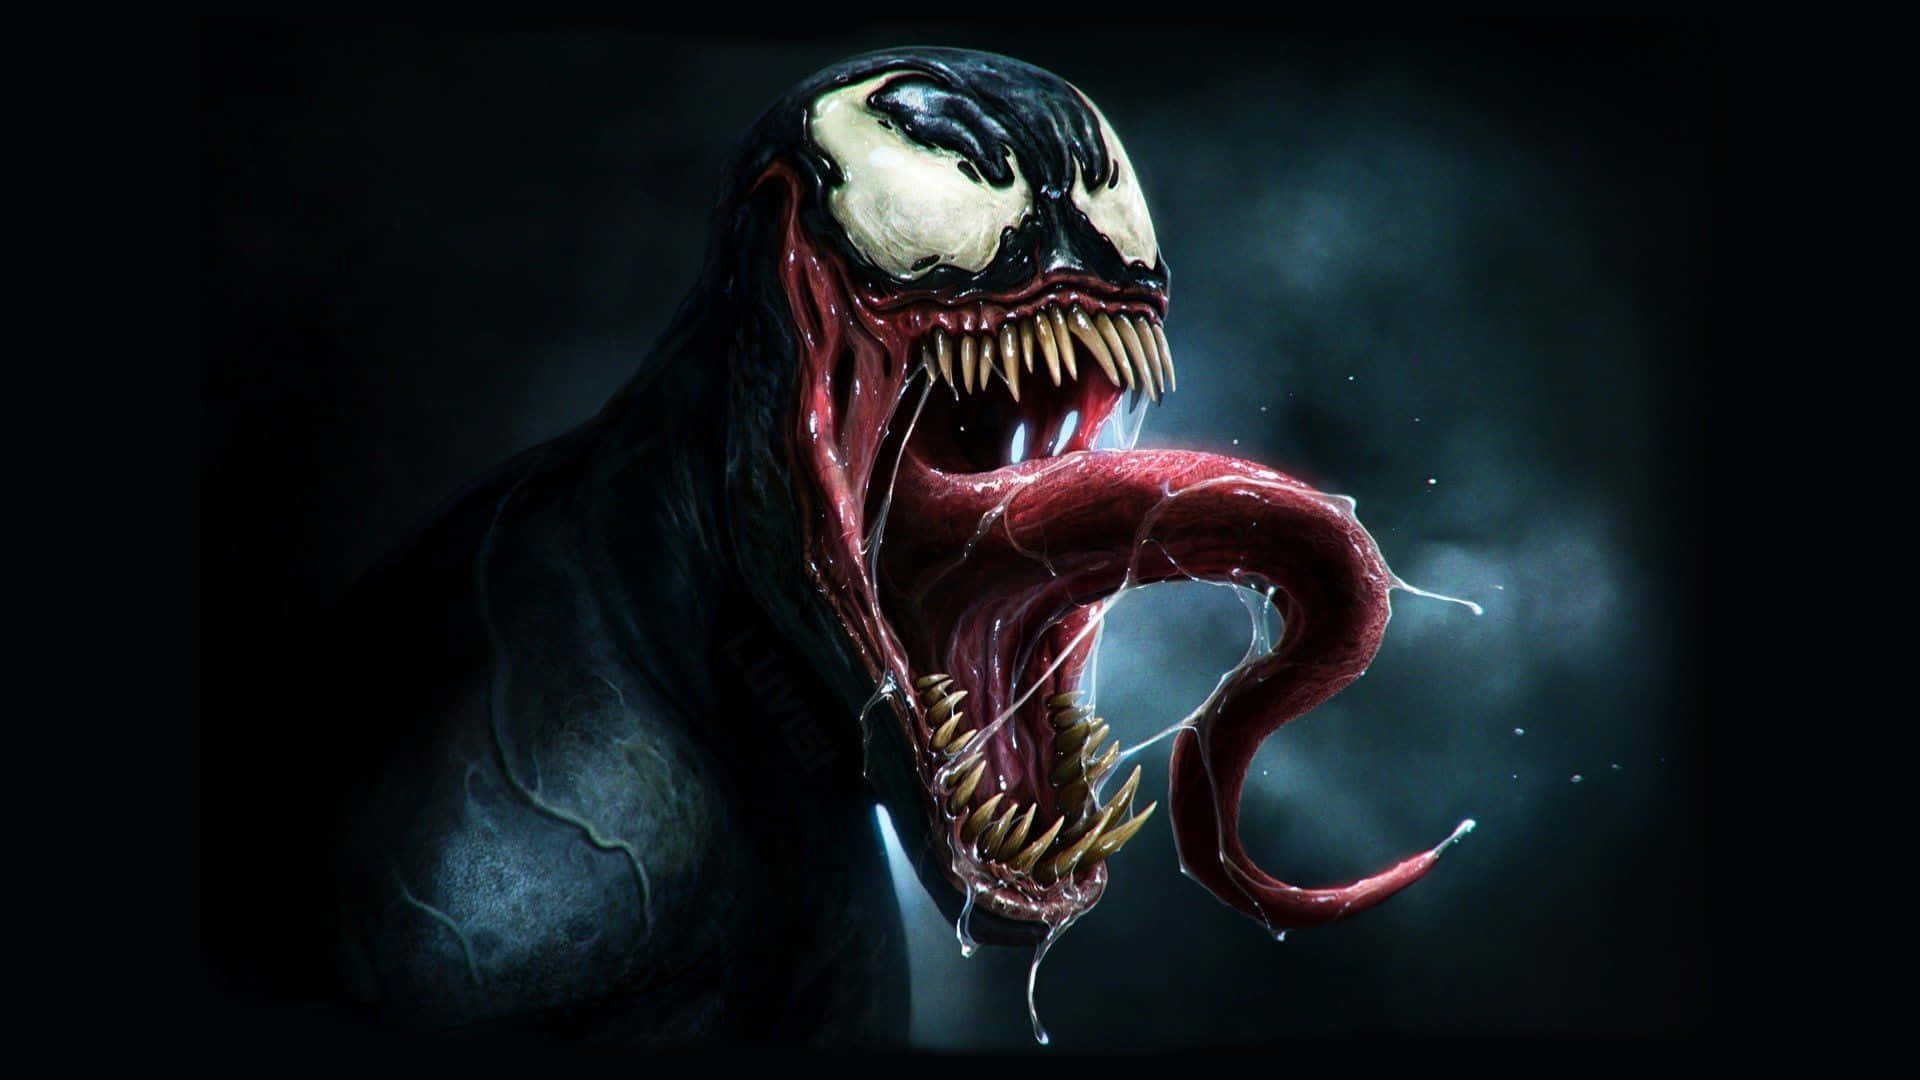 "I'll take what I want." - Venom